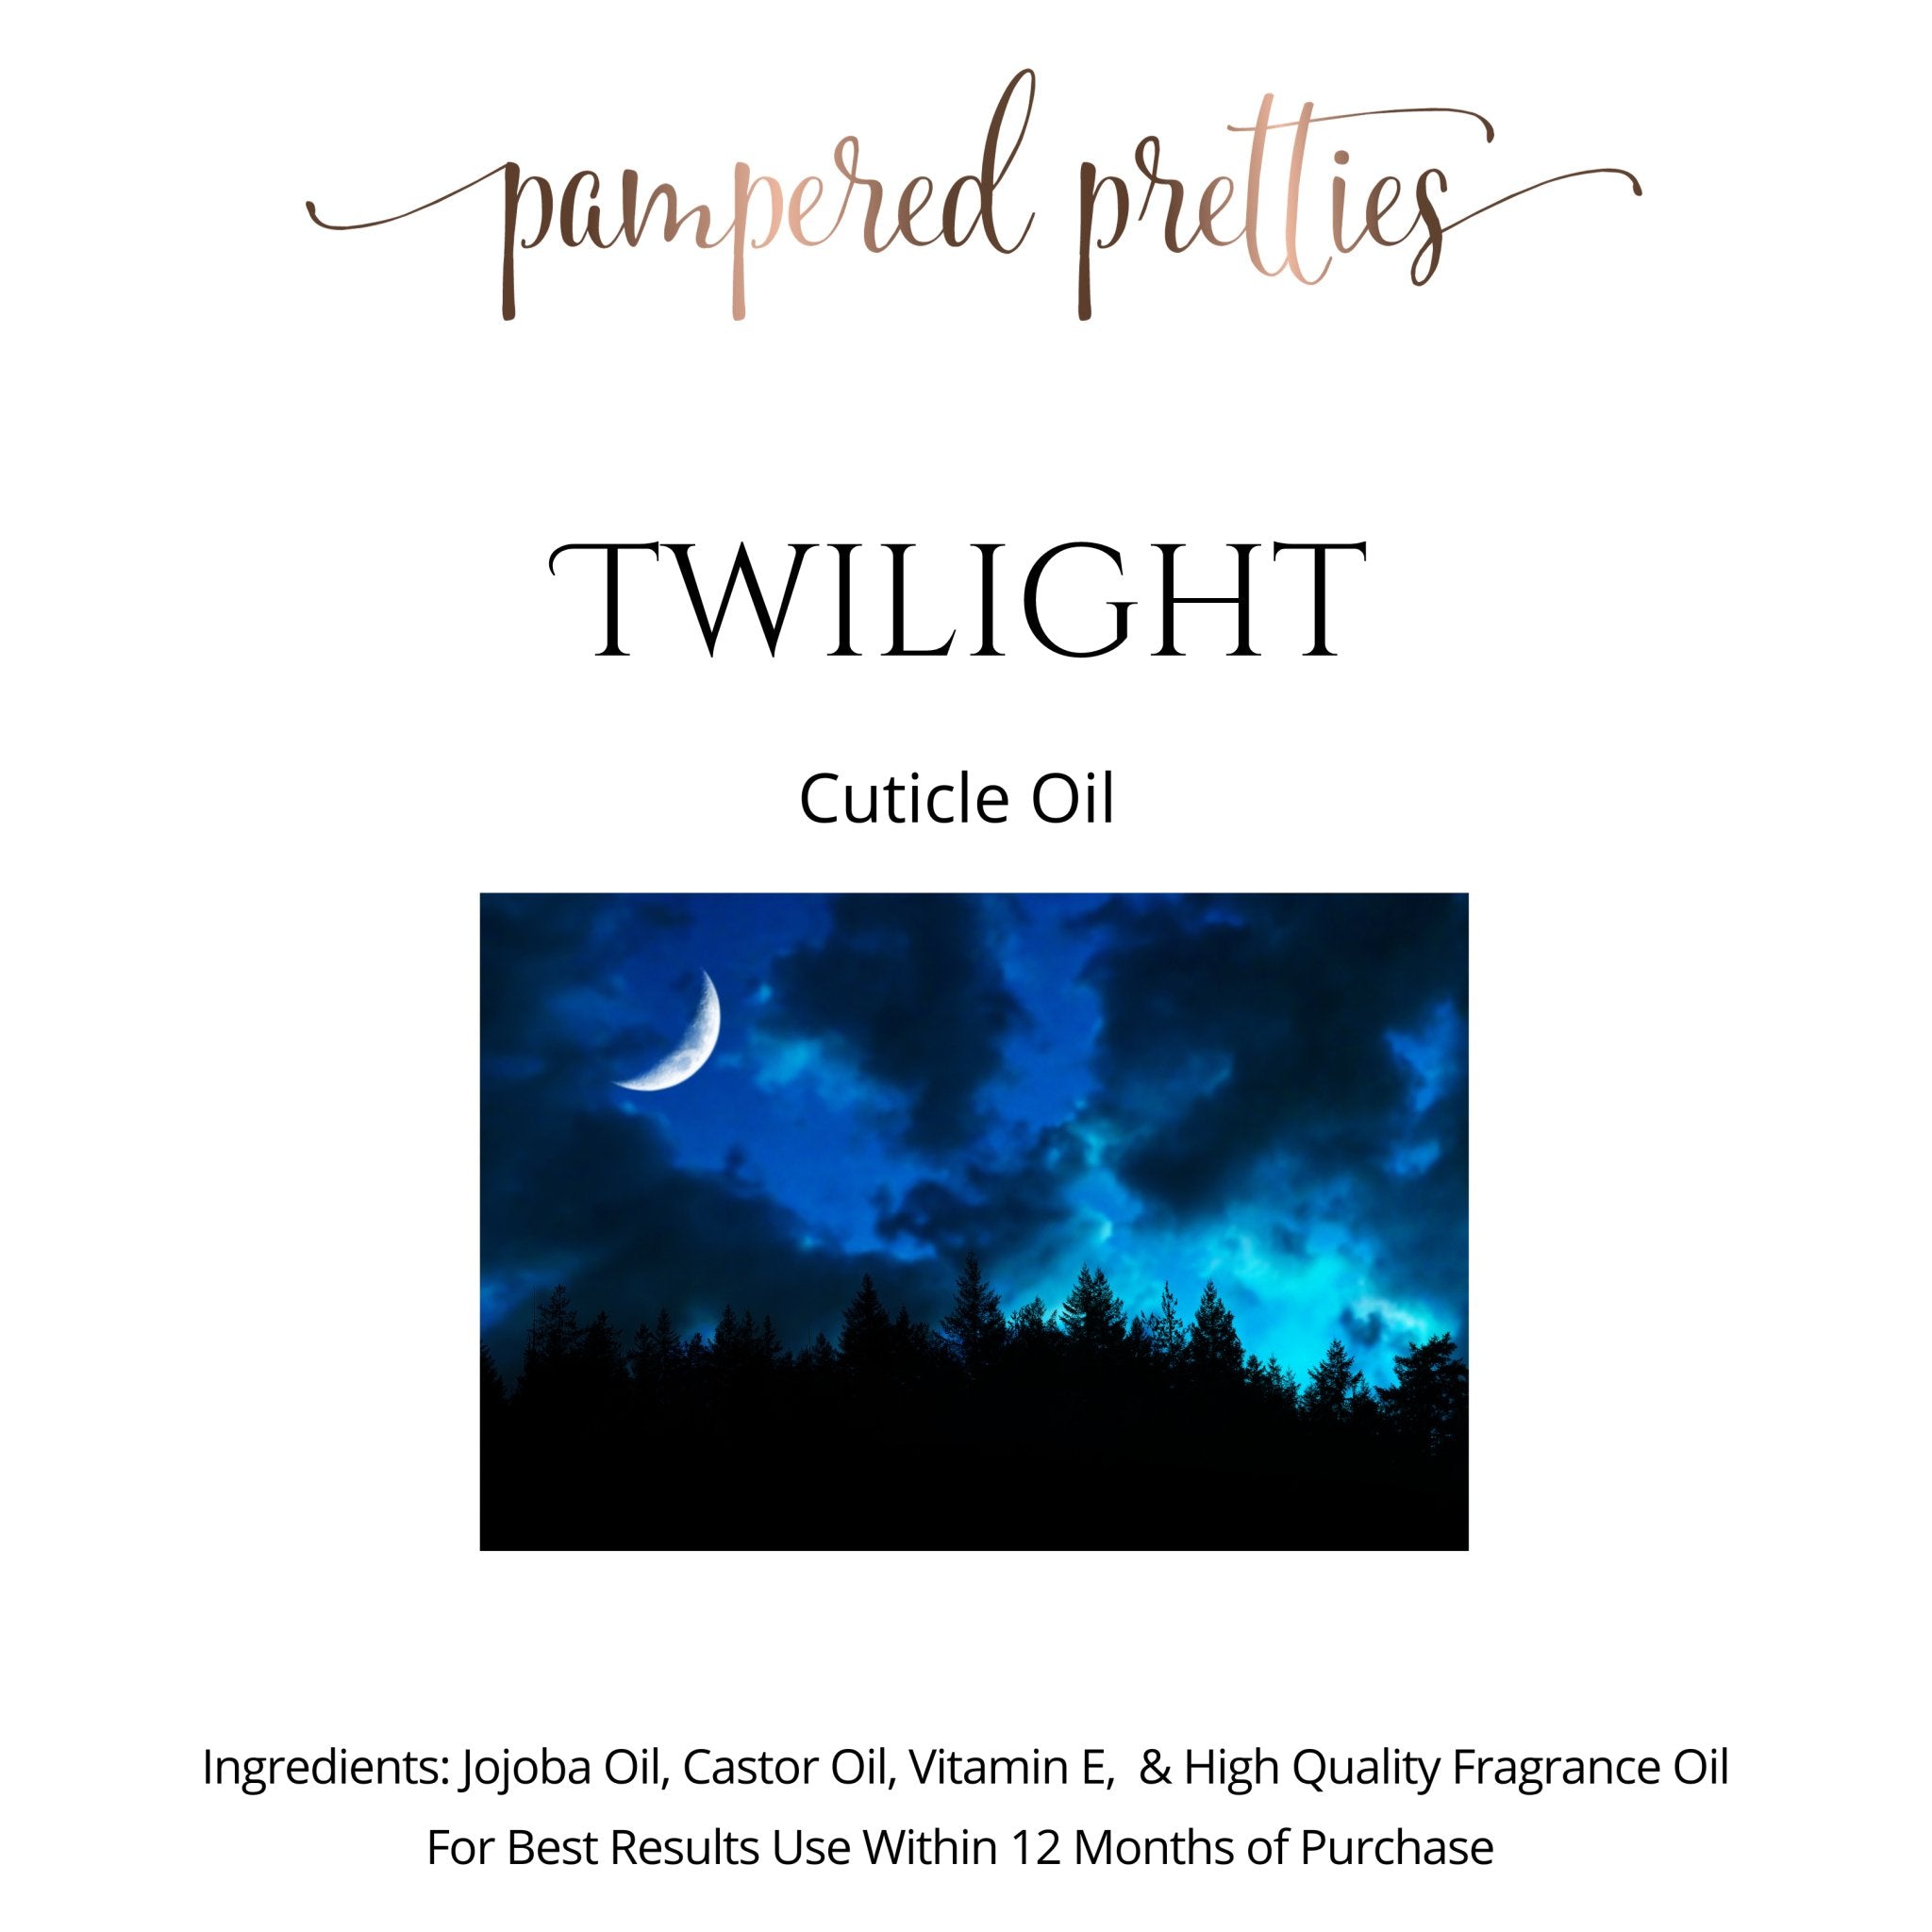 Twilight Cuticle Oil - Pampered Pretties